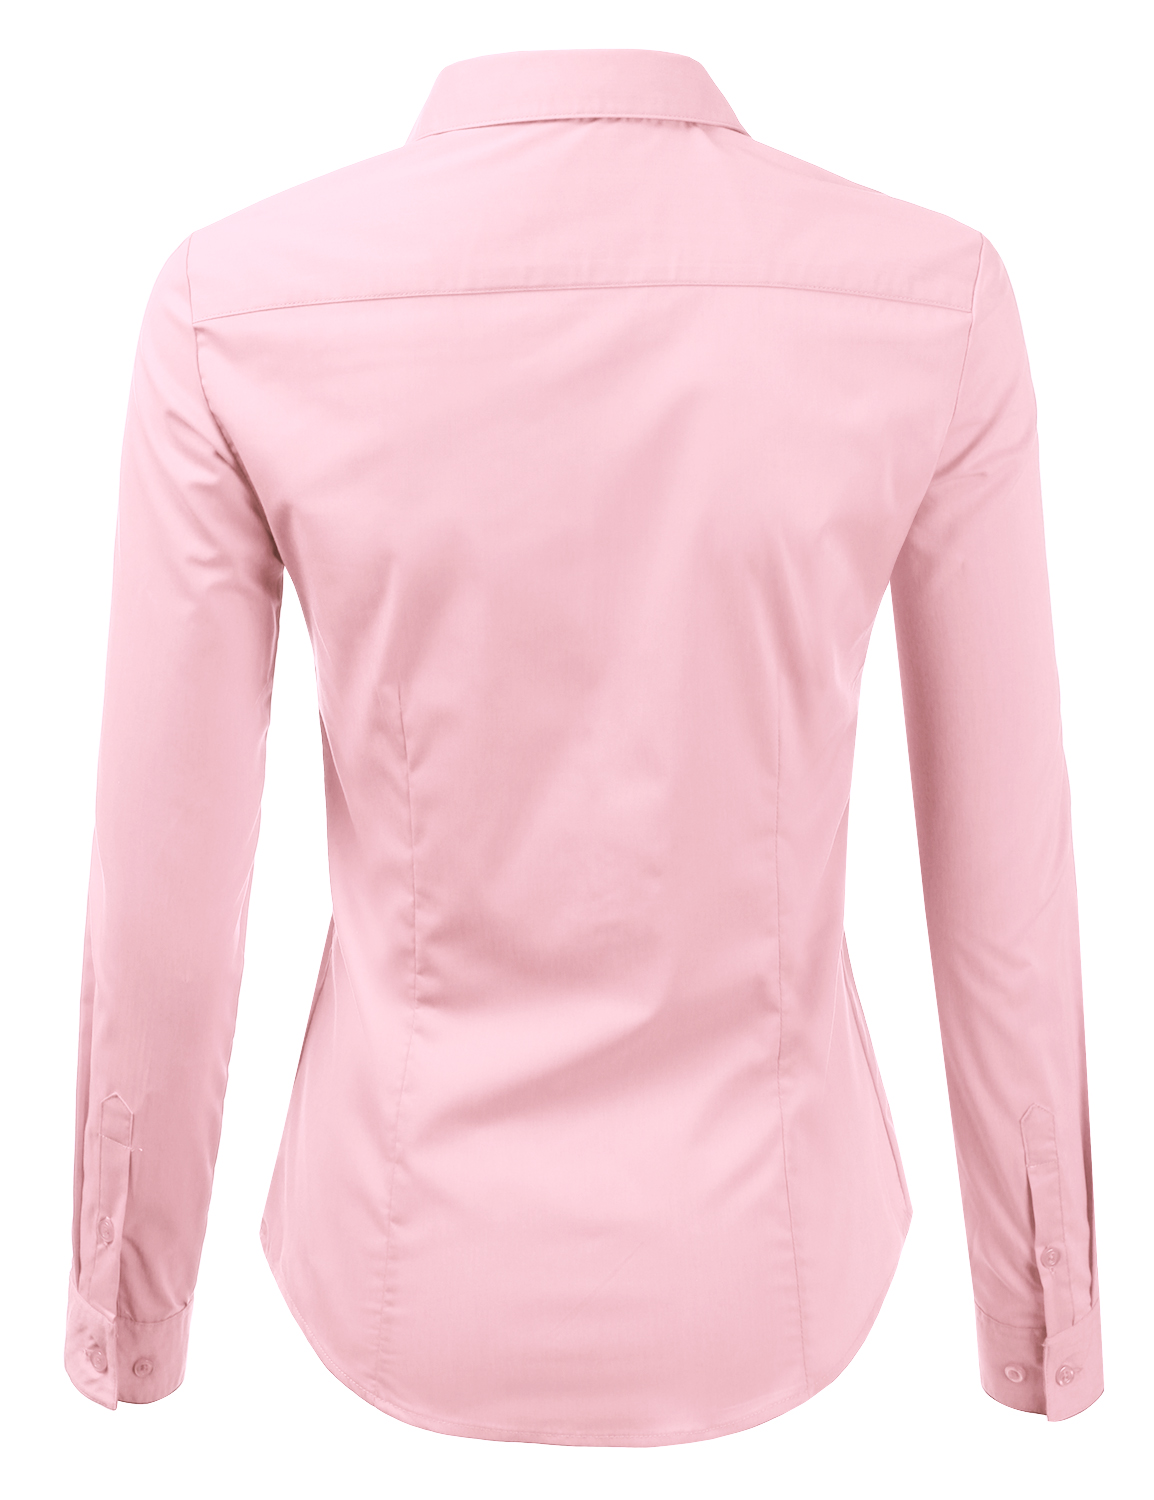 Doublju Women's Long Sleeve Slim Fit Button Down Dress Shirt (Plus Size ...